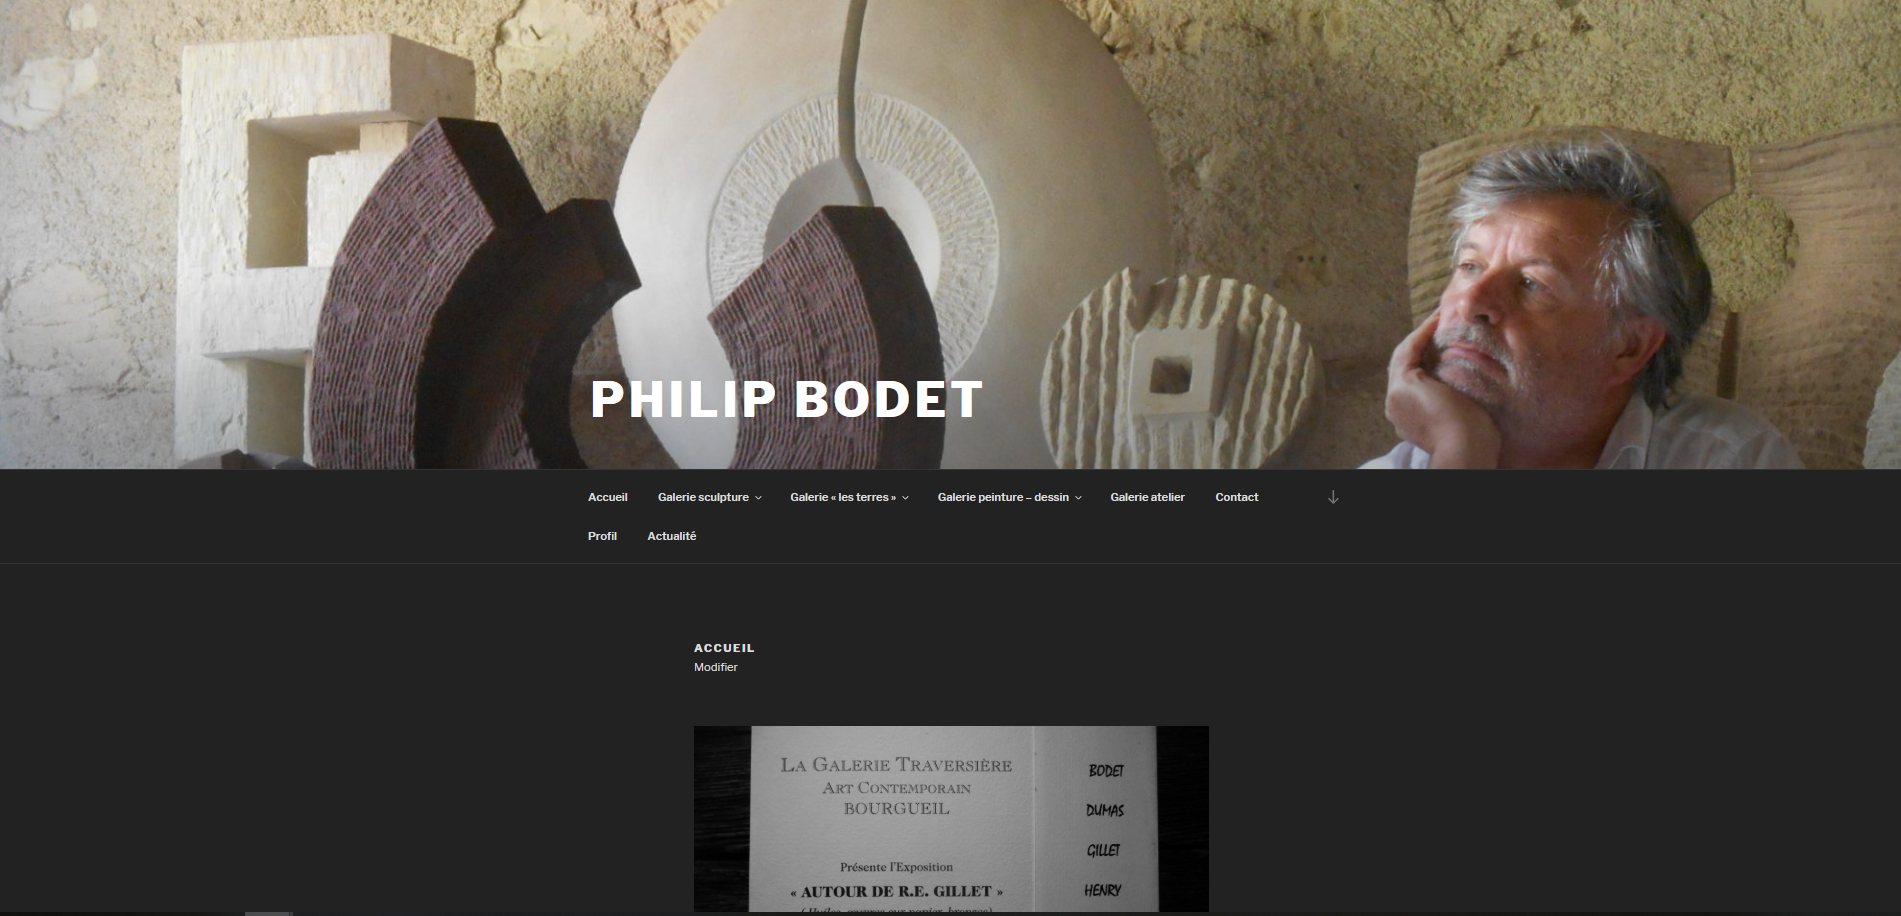 Philip Bodet